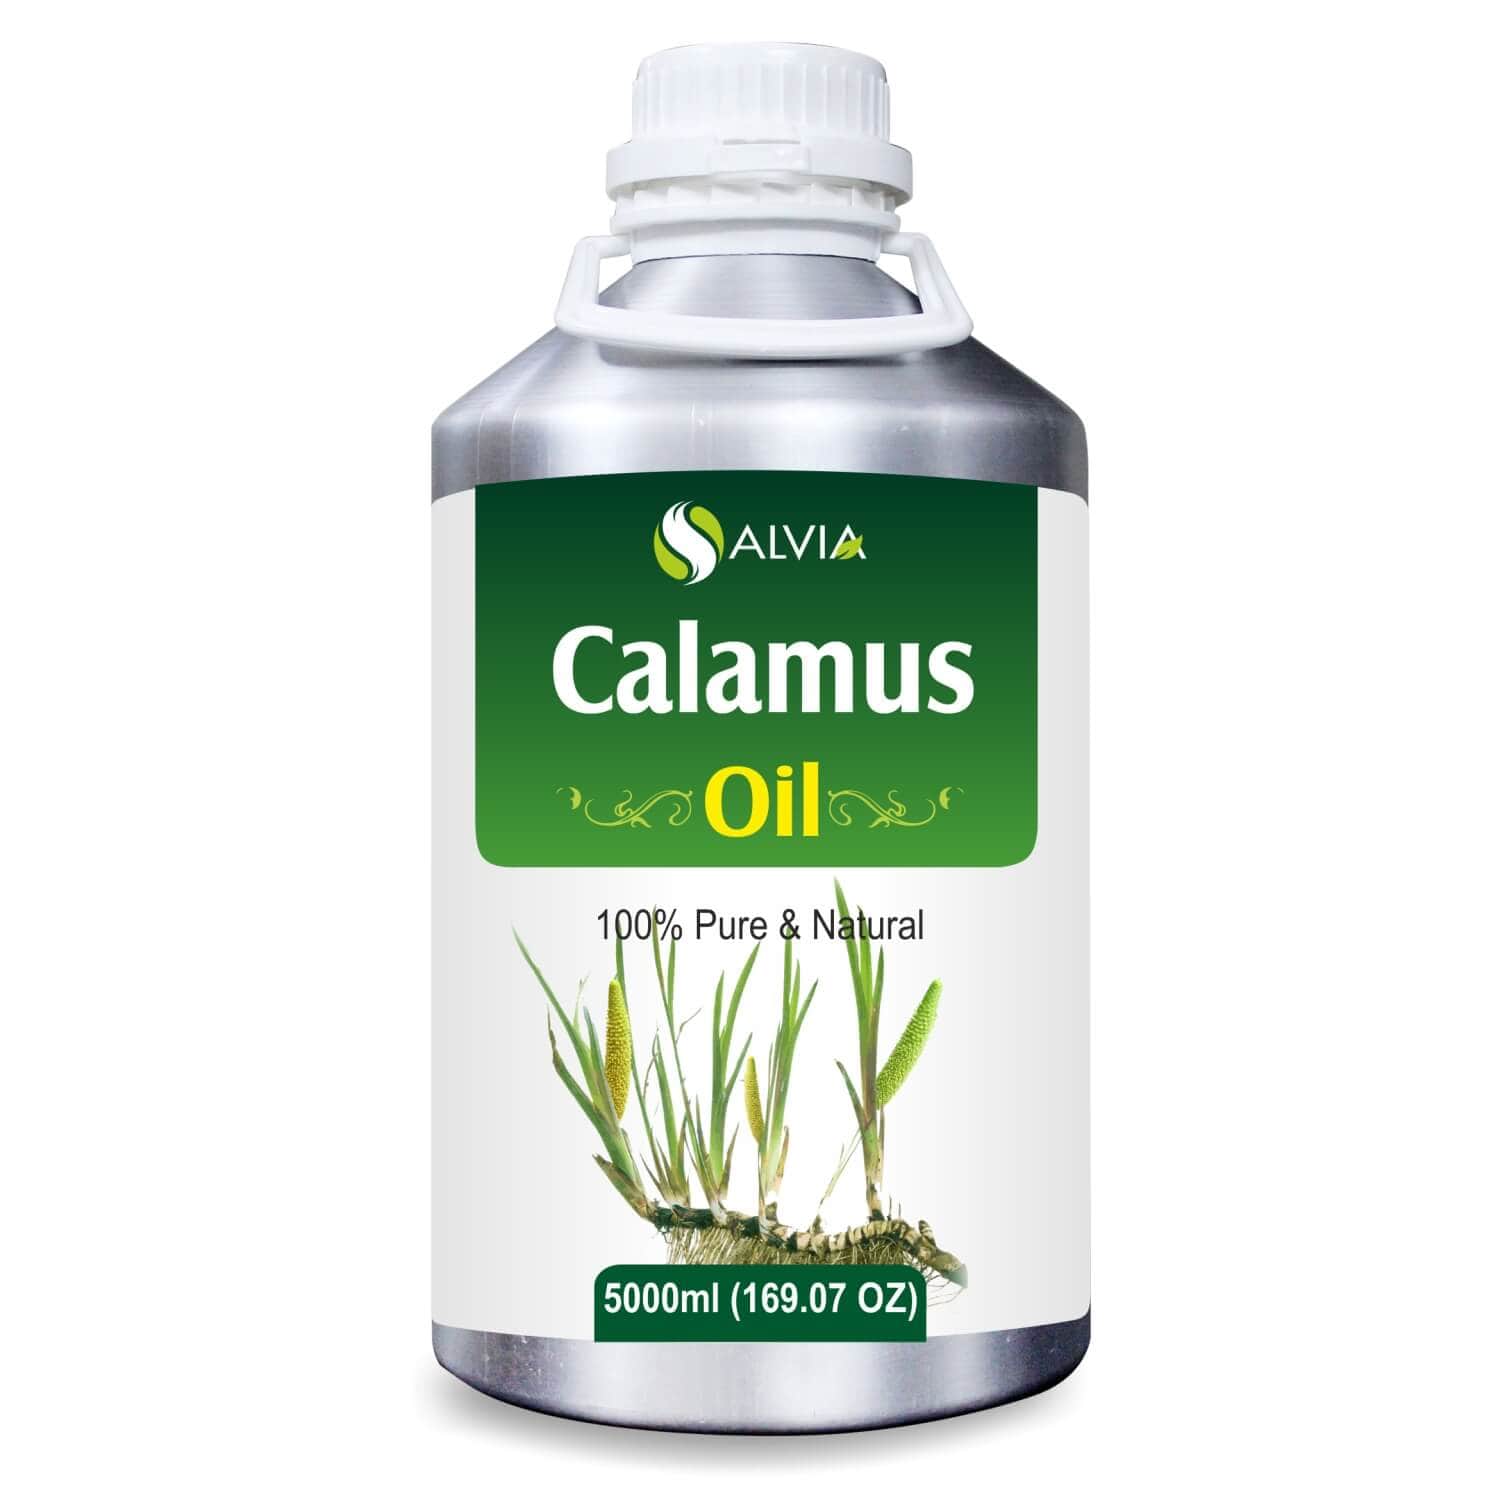 Salvia Natural Essential Oils 5000ml Calamus Oil (Acorus Calamus) 100% Natural Pure Essential Oil Used in Aromatherapy, Treats Insomnia, & Headaches, Boosts Metabolism